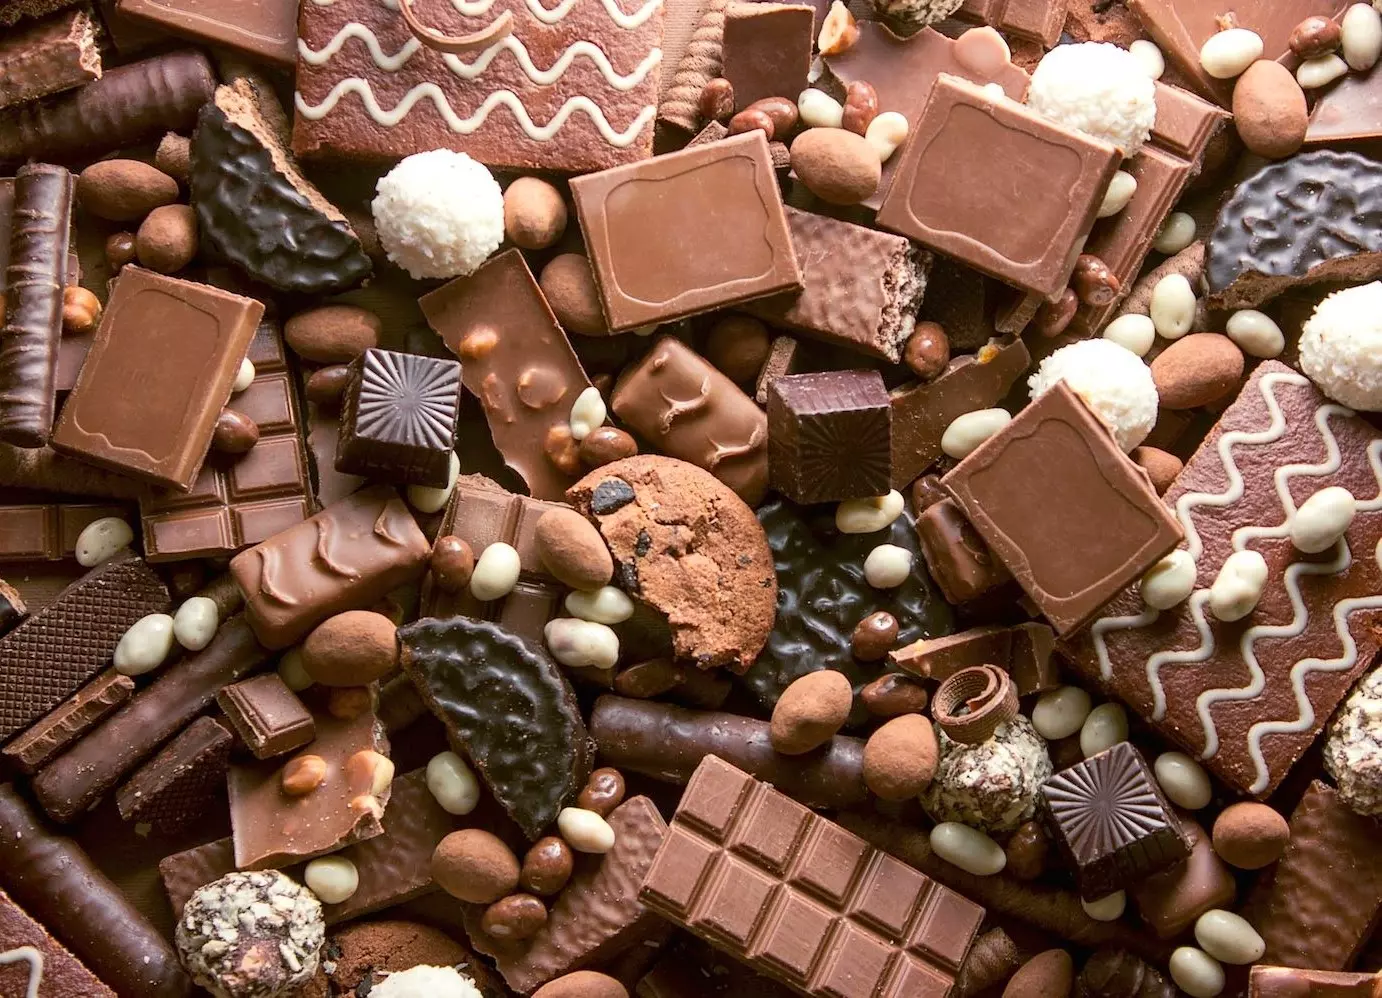 Chocolate-giup-cai-thien-tam-trang,-giam-cang-thang-met-moi,-tang-cam-xuc-vui-ve-tich-cuc.webp